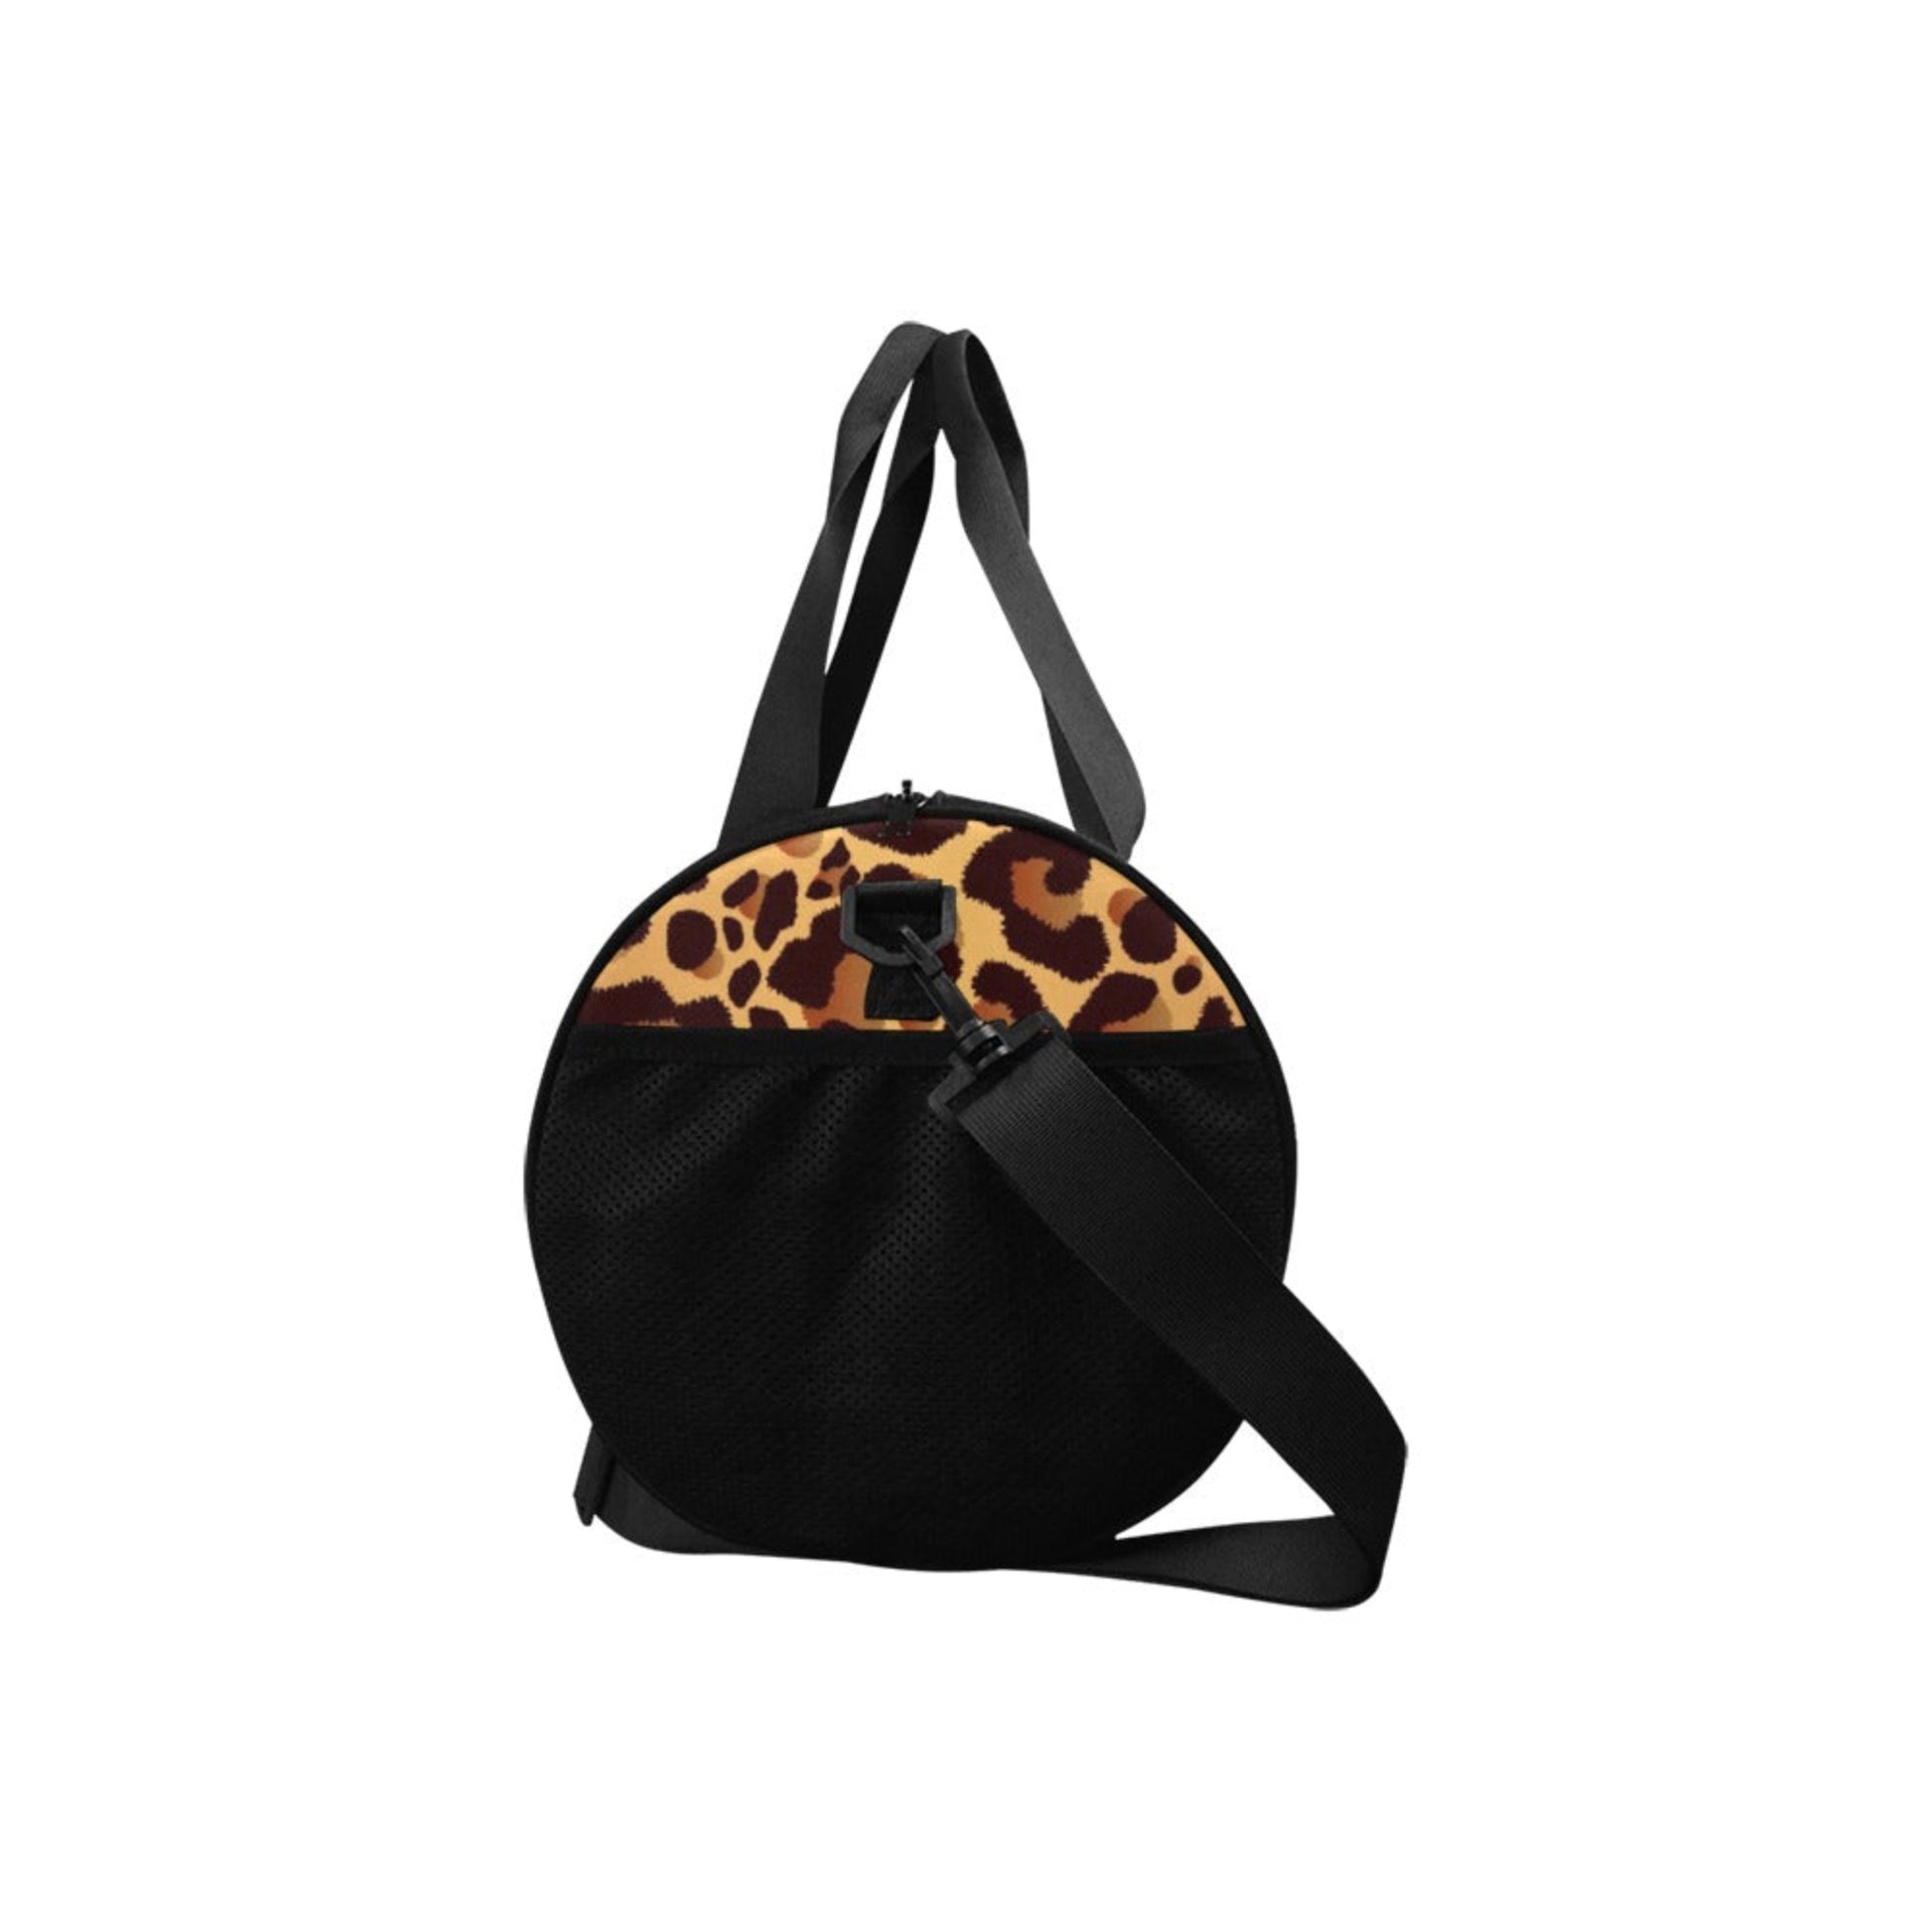 Leopard Print - Round Duffle Bag Round Duffle Bag